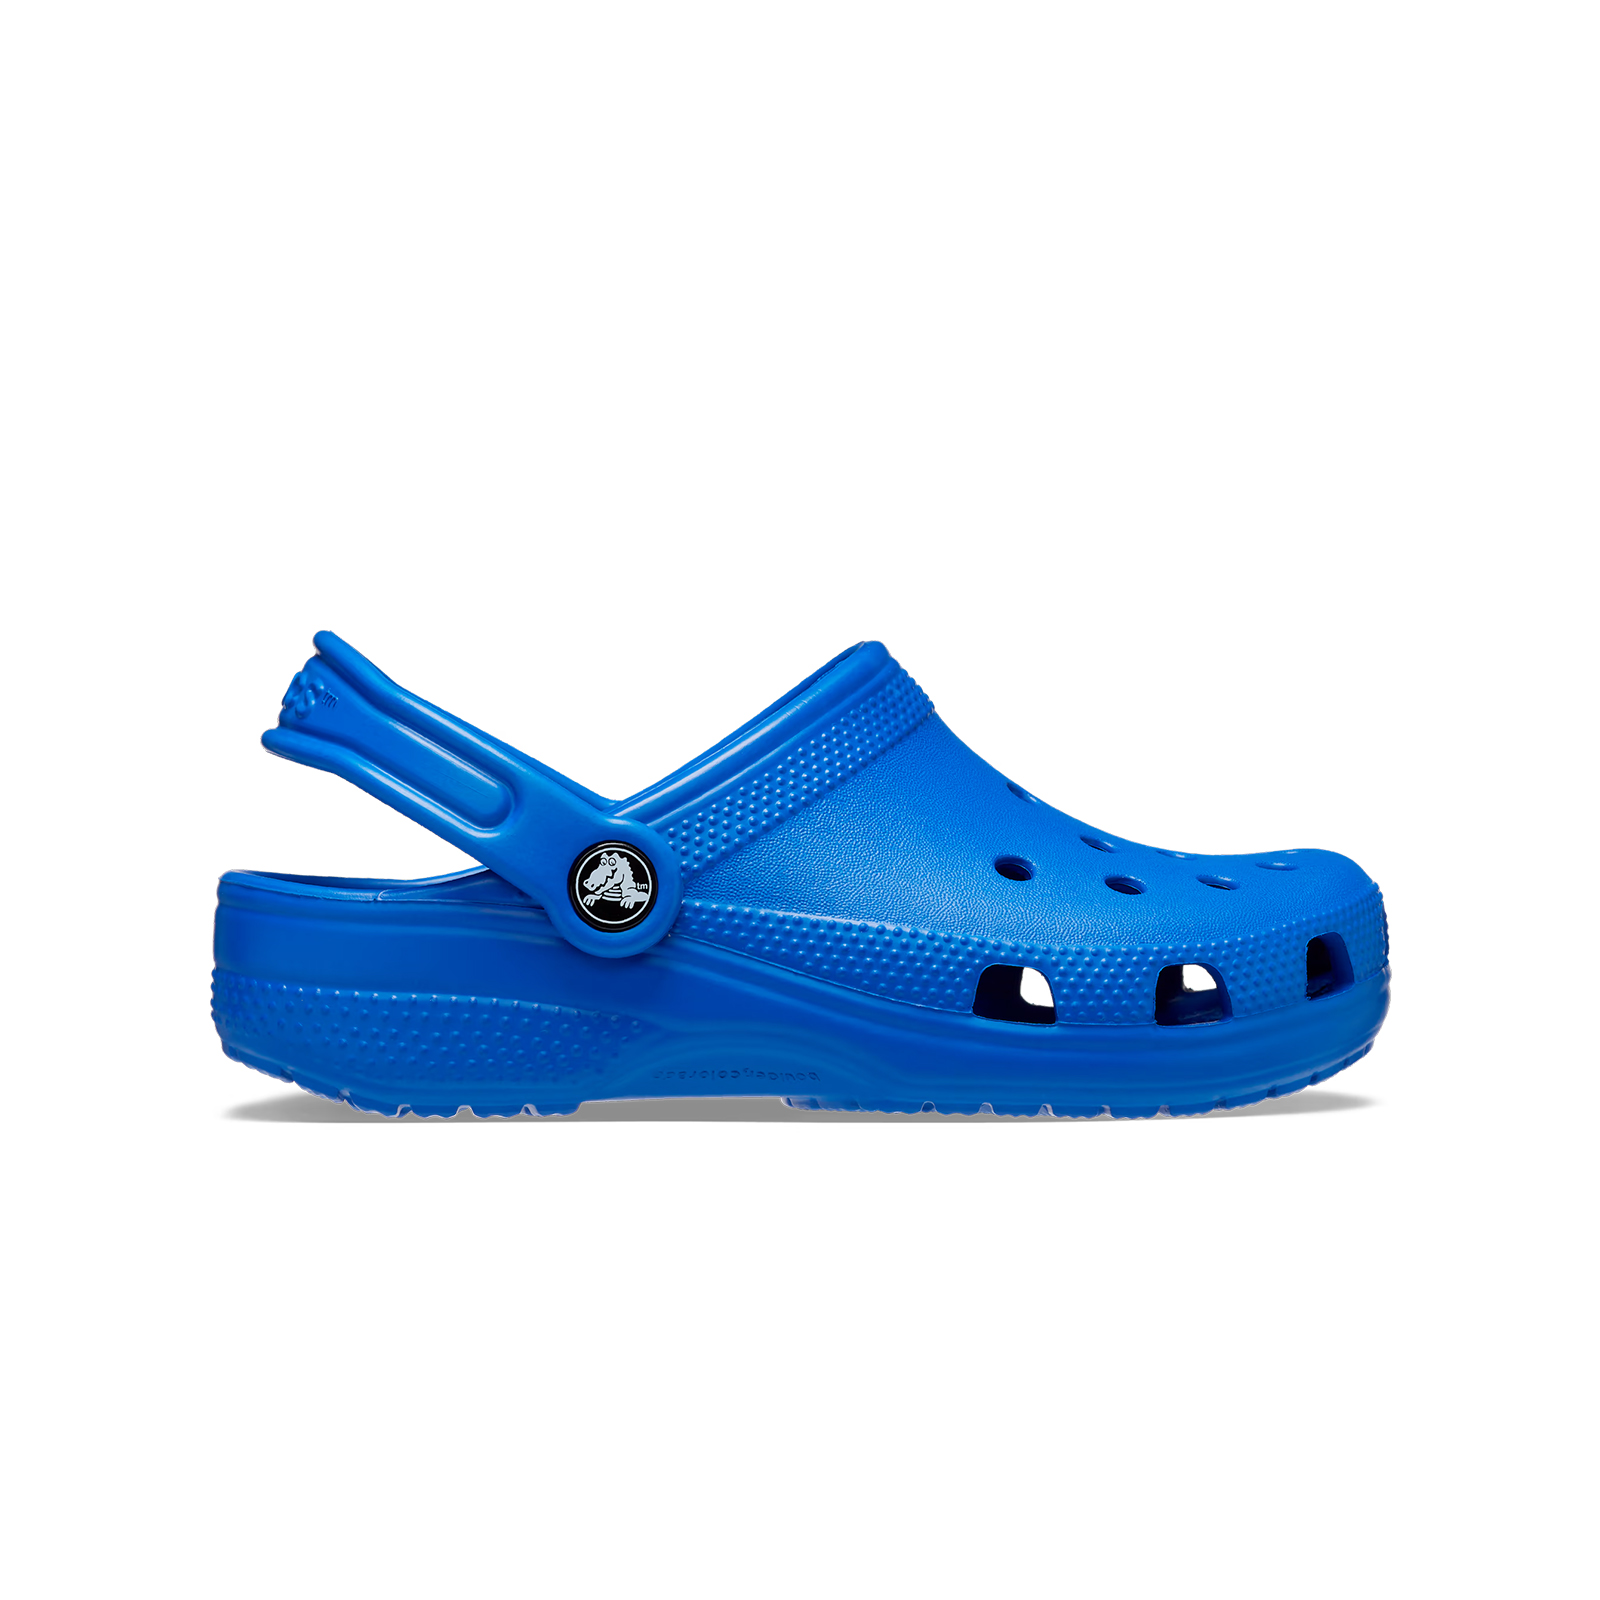 Crocs - CLASSIC CLOG K - BLUE BOLT Παιδικά > Παπούτσια > Clogs > Glogs